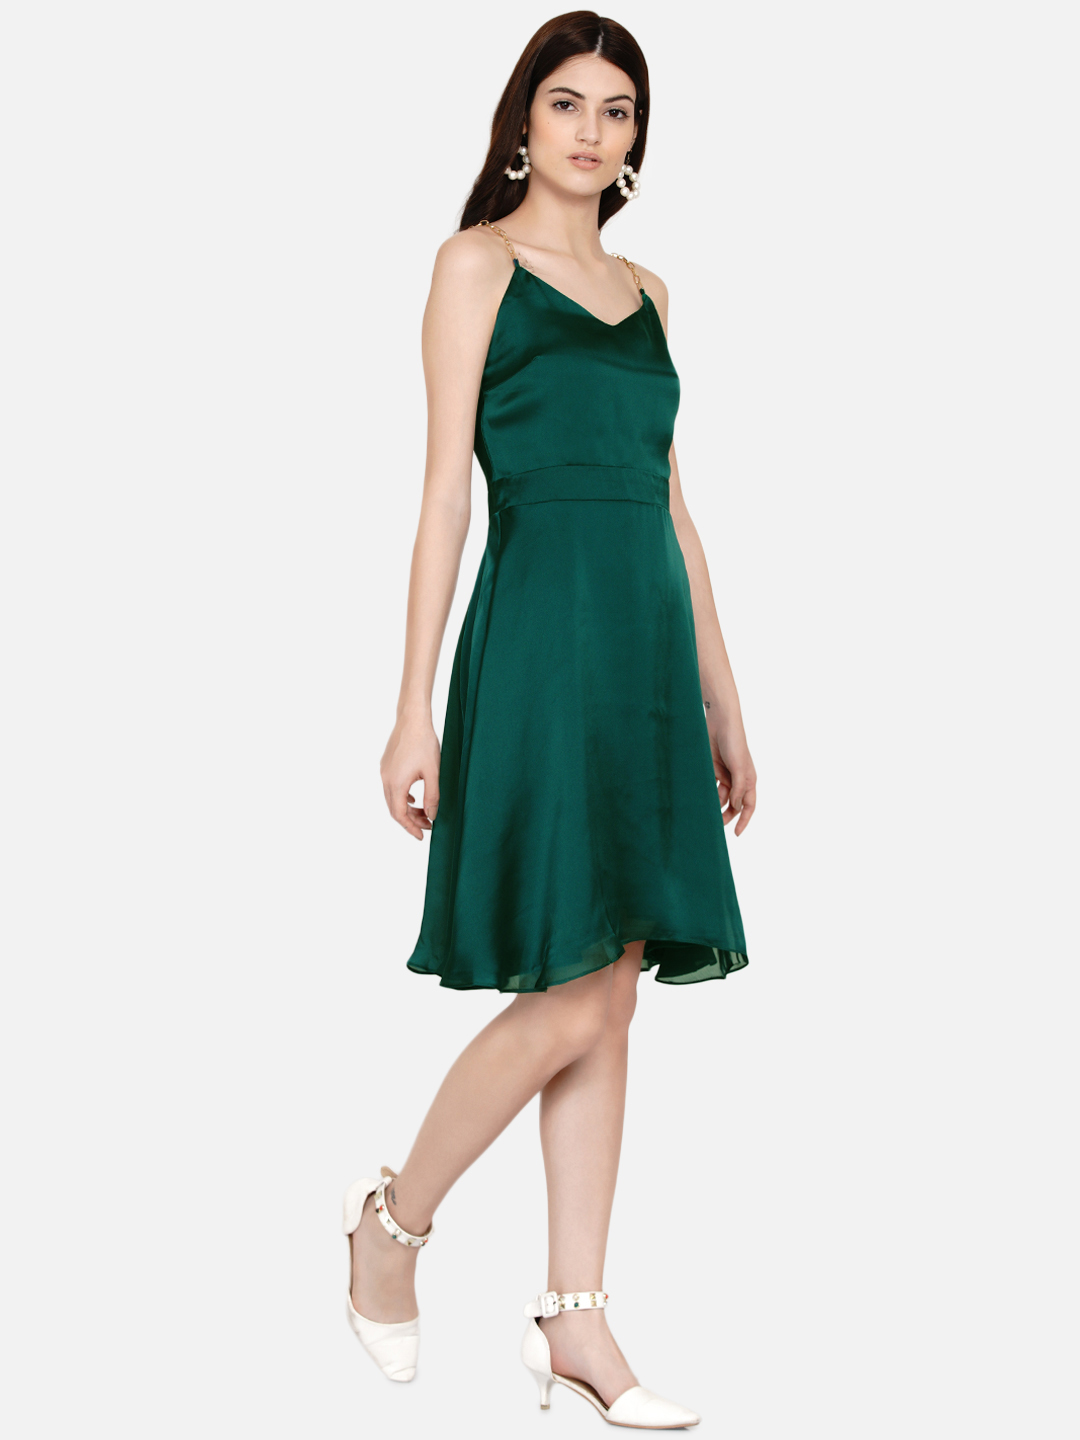 Emerald princess dress -1